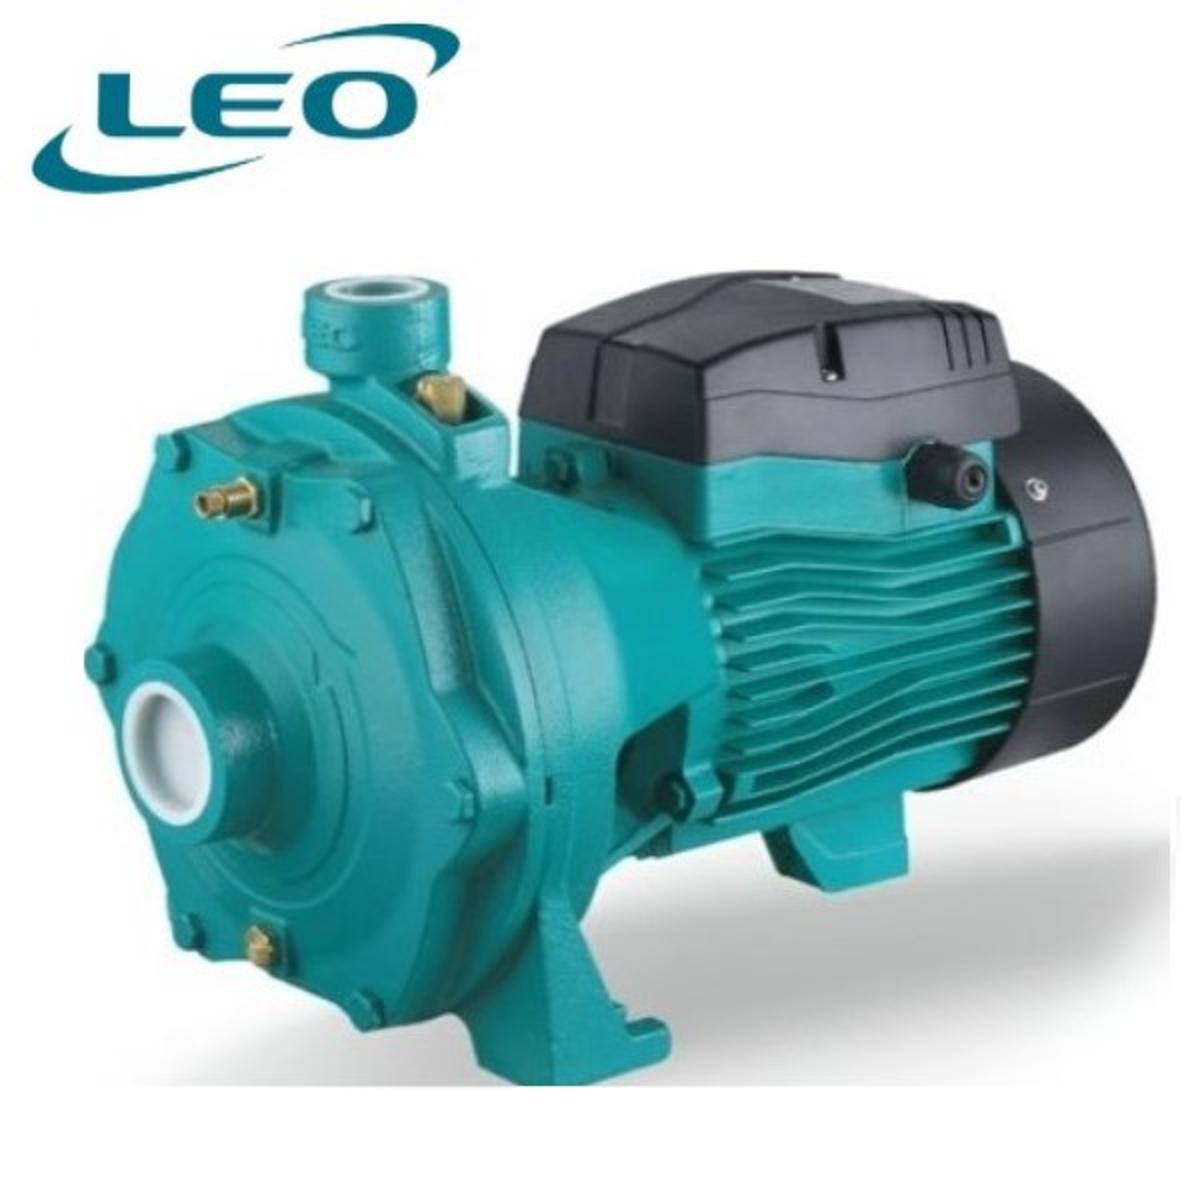 LEO - 2AC-220 - 2200W - 3.0 HP - TWIN IMPELLER Centrifugal Pump- 380V~400V THREE PHASE- SIZE:- 1 1-2 " X 1"- European STANDARD